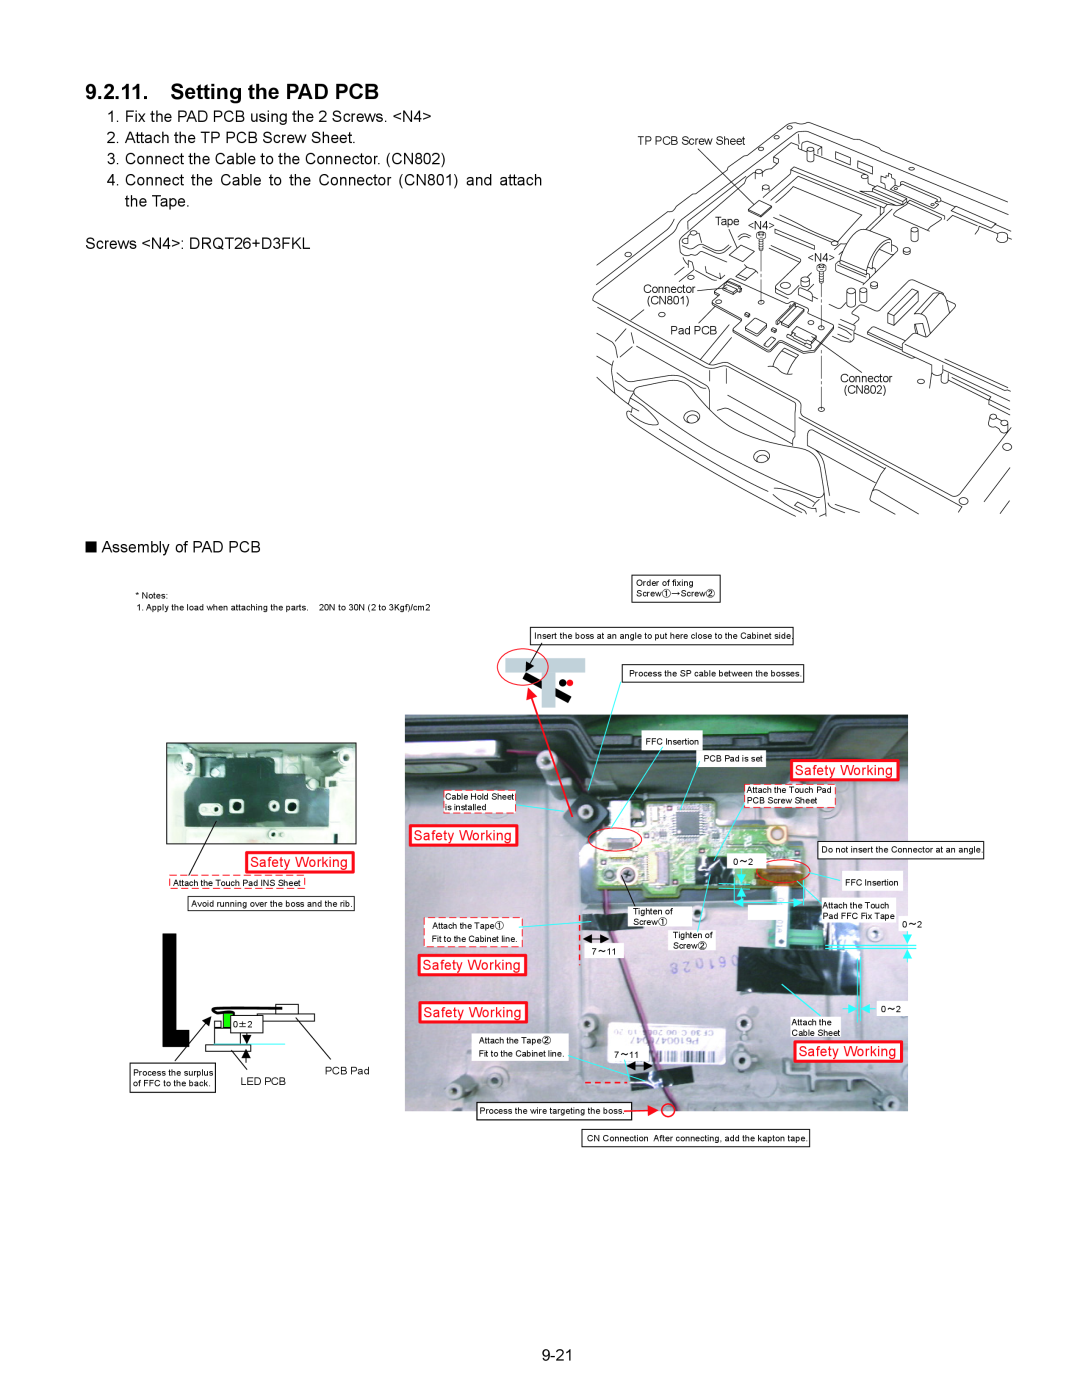 Matsushita CF-30 service manual Setting the PAD PCB, Safety Working 